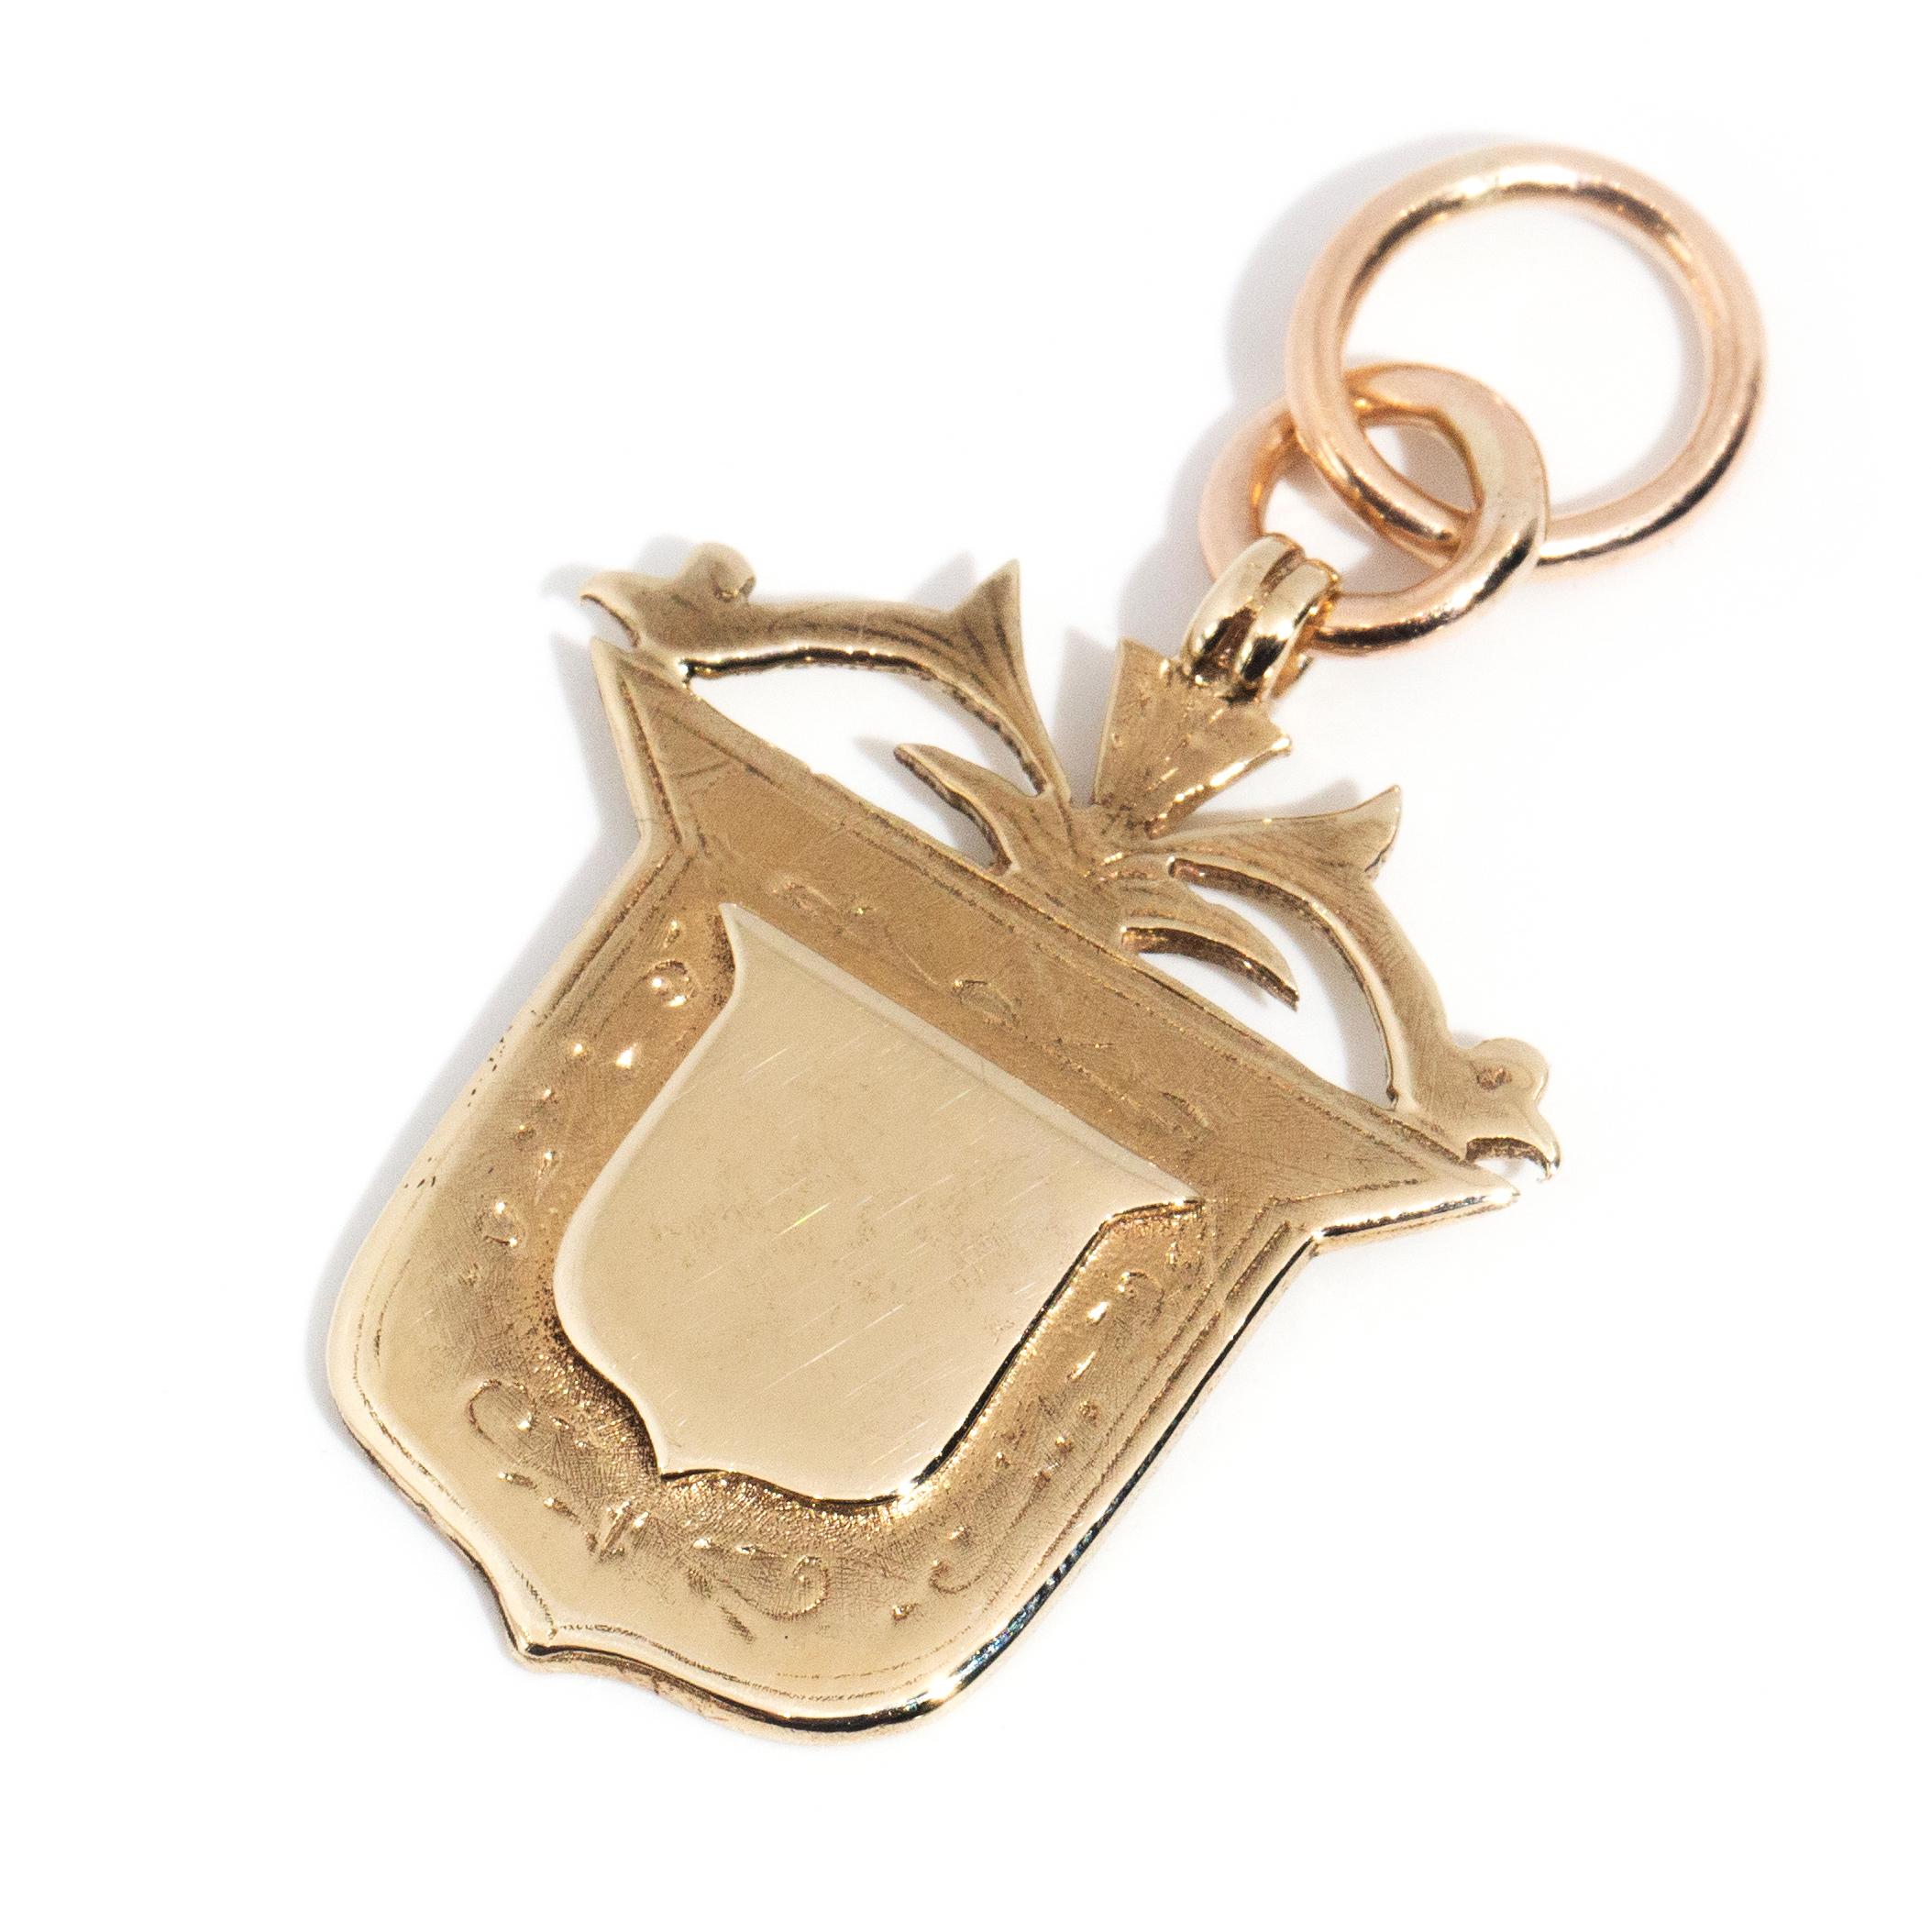 gold shield pendant